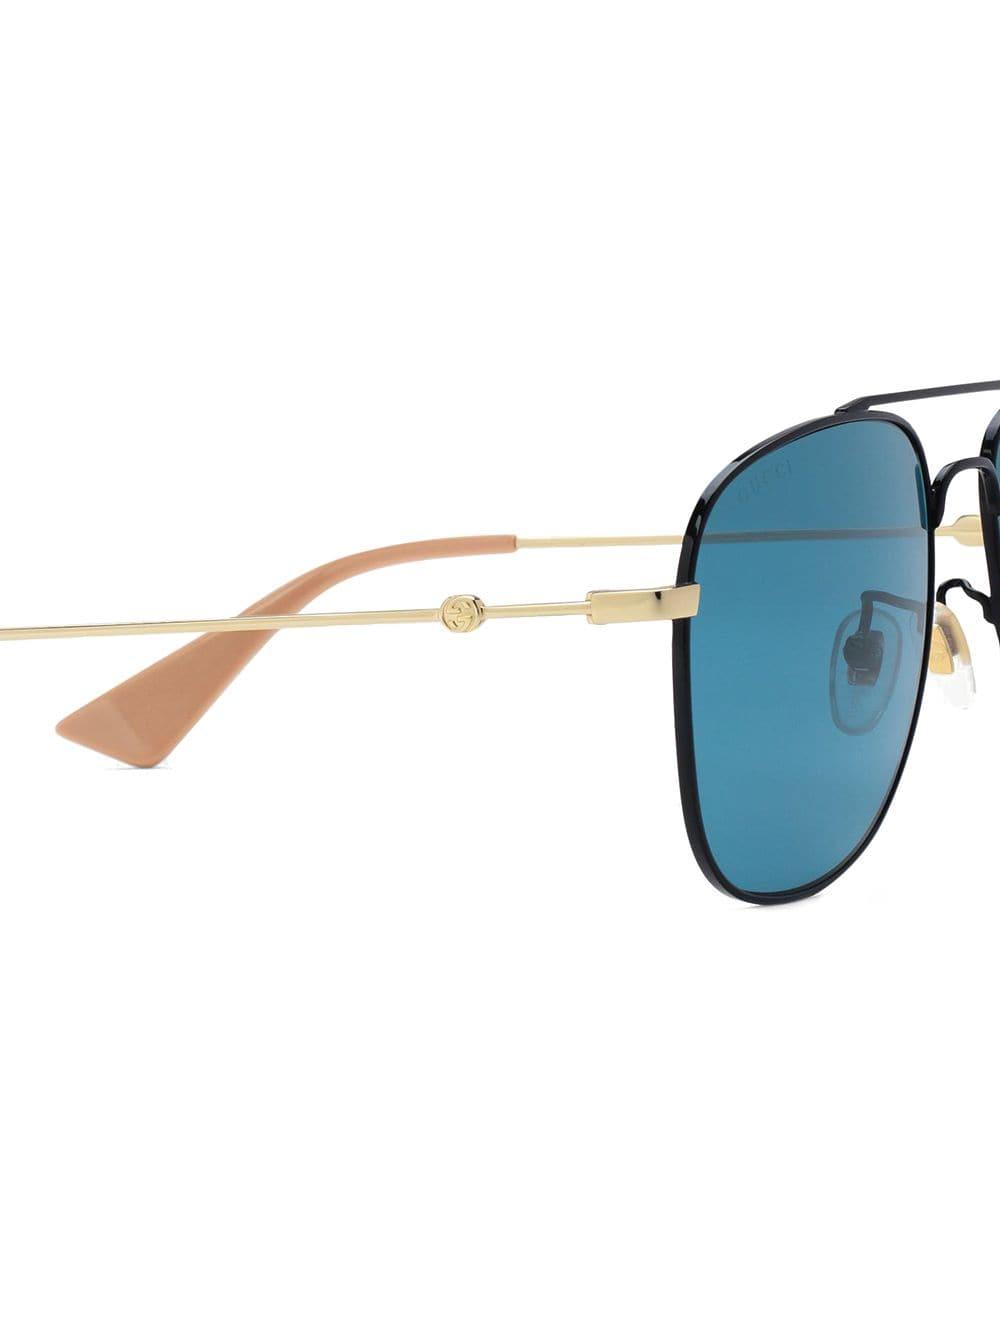 Gucci Rubber Aviator Sunglasses In Black Blue Blue For Men Save 27